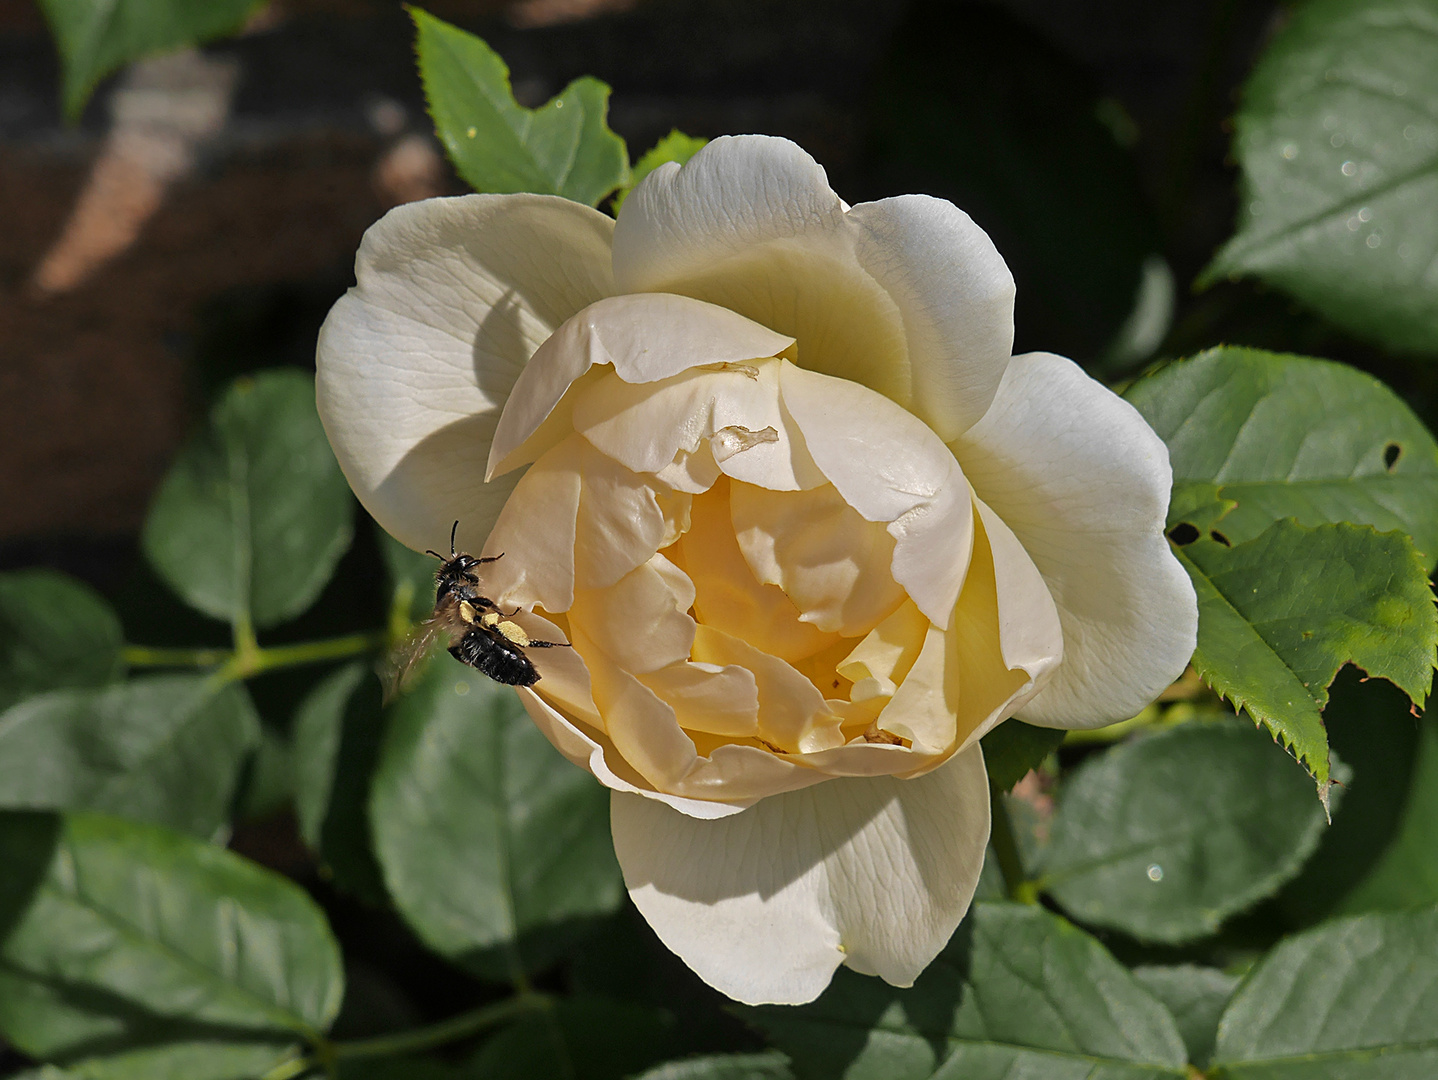 Edle Rose mit pollenbeladener Besucherin